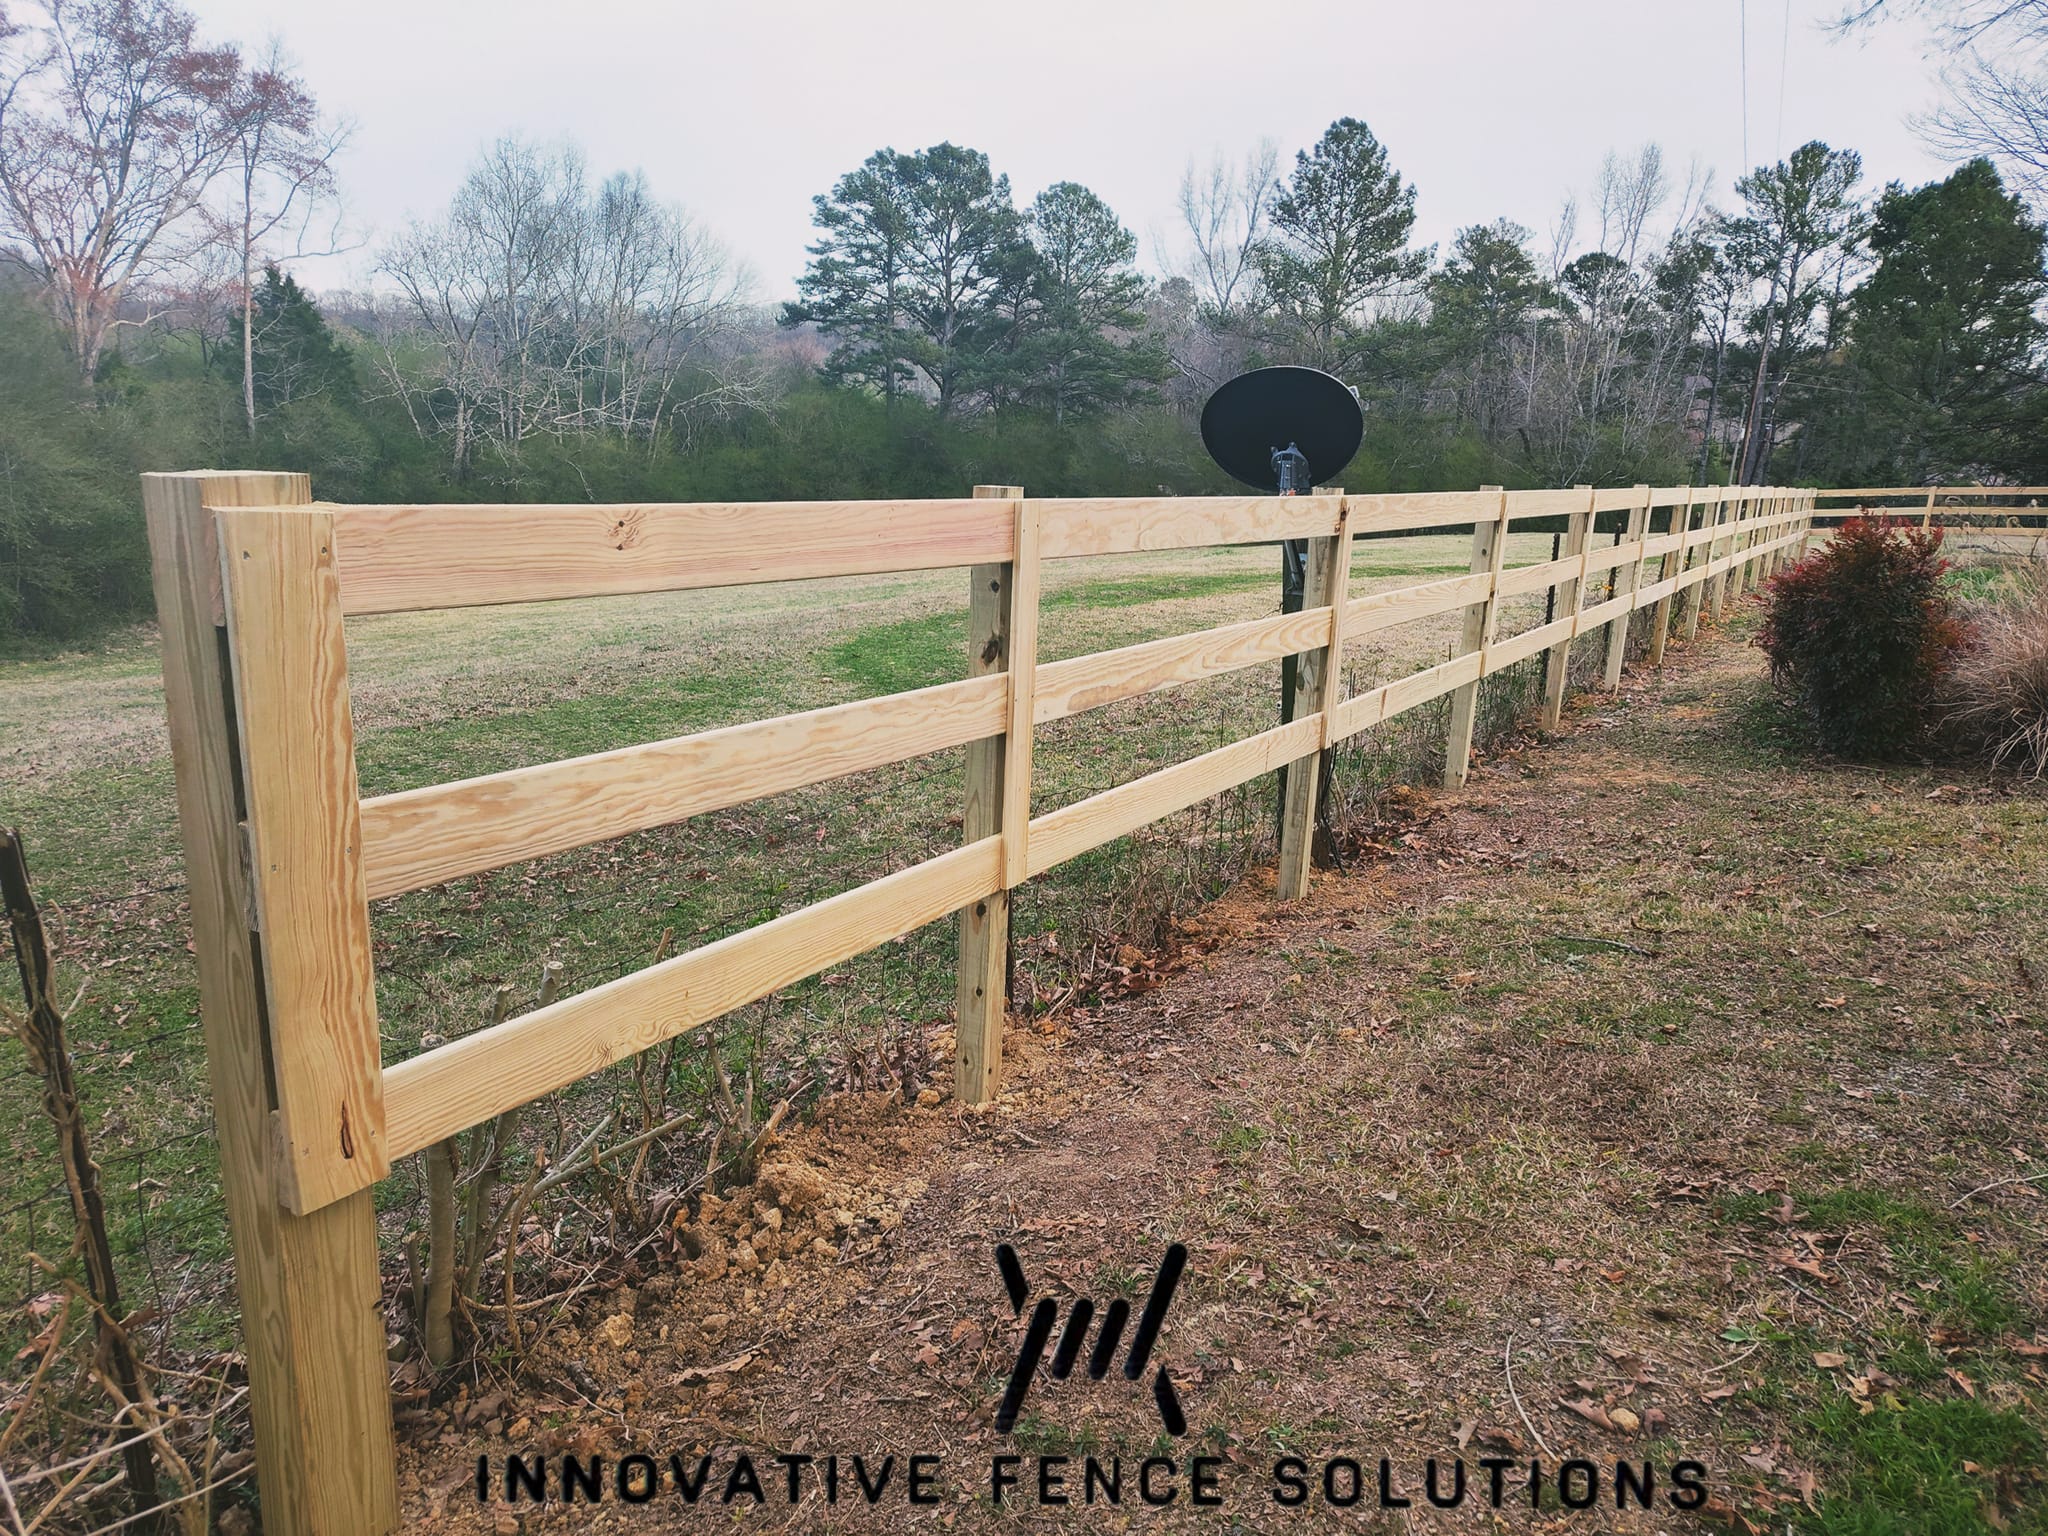 Innovative Fence Solutions 13460 AL-157, Vinemont Alabama 35179